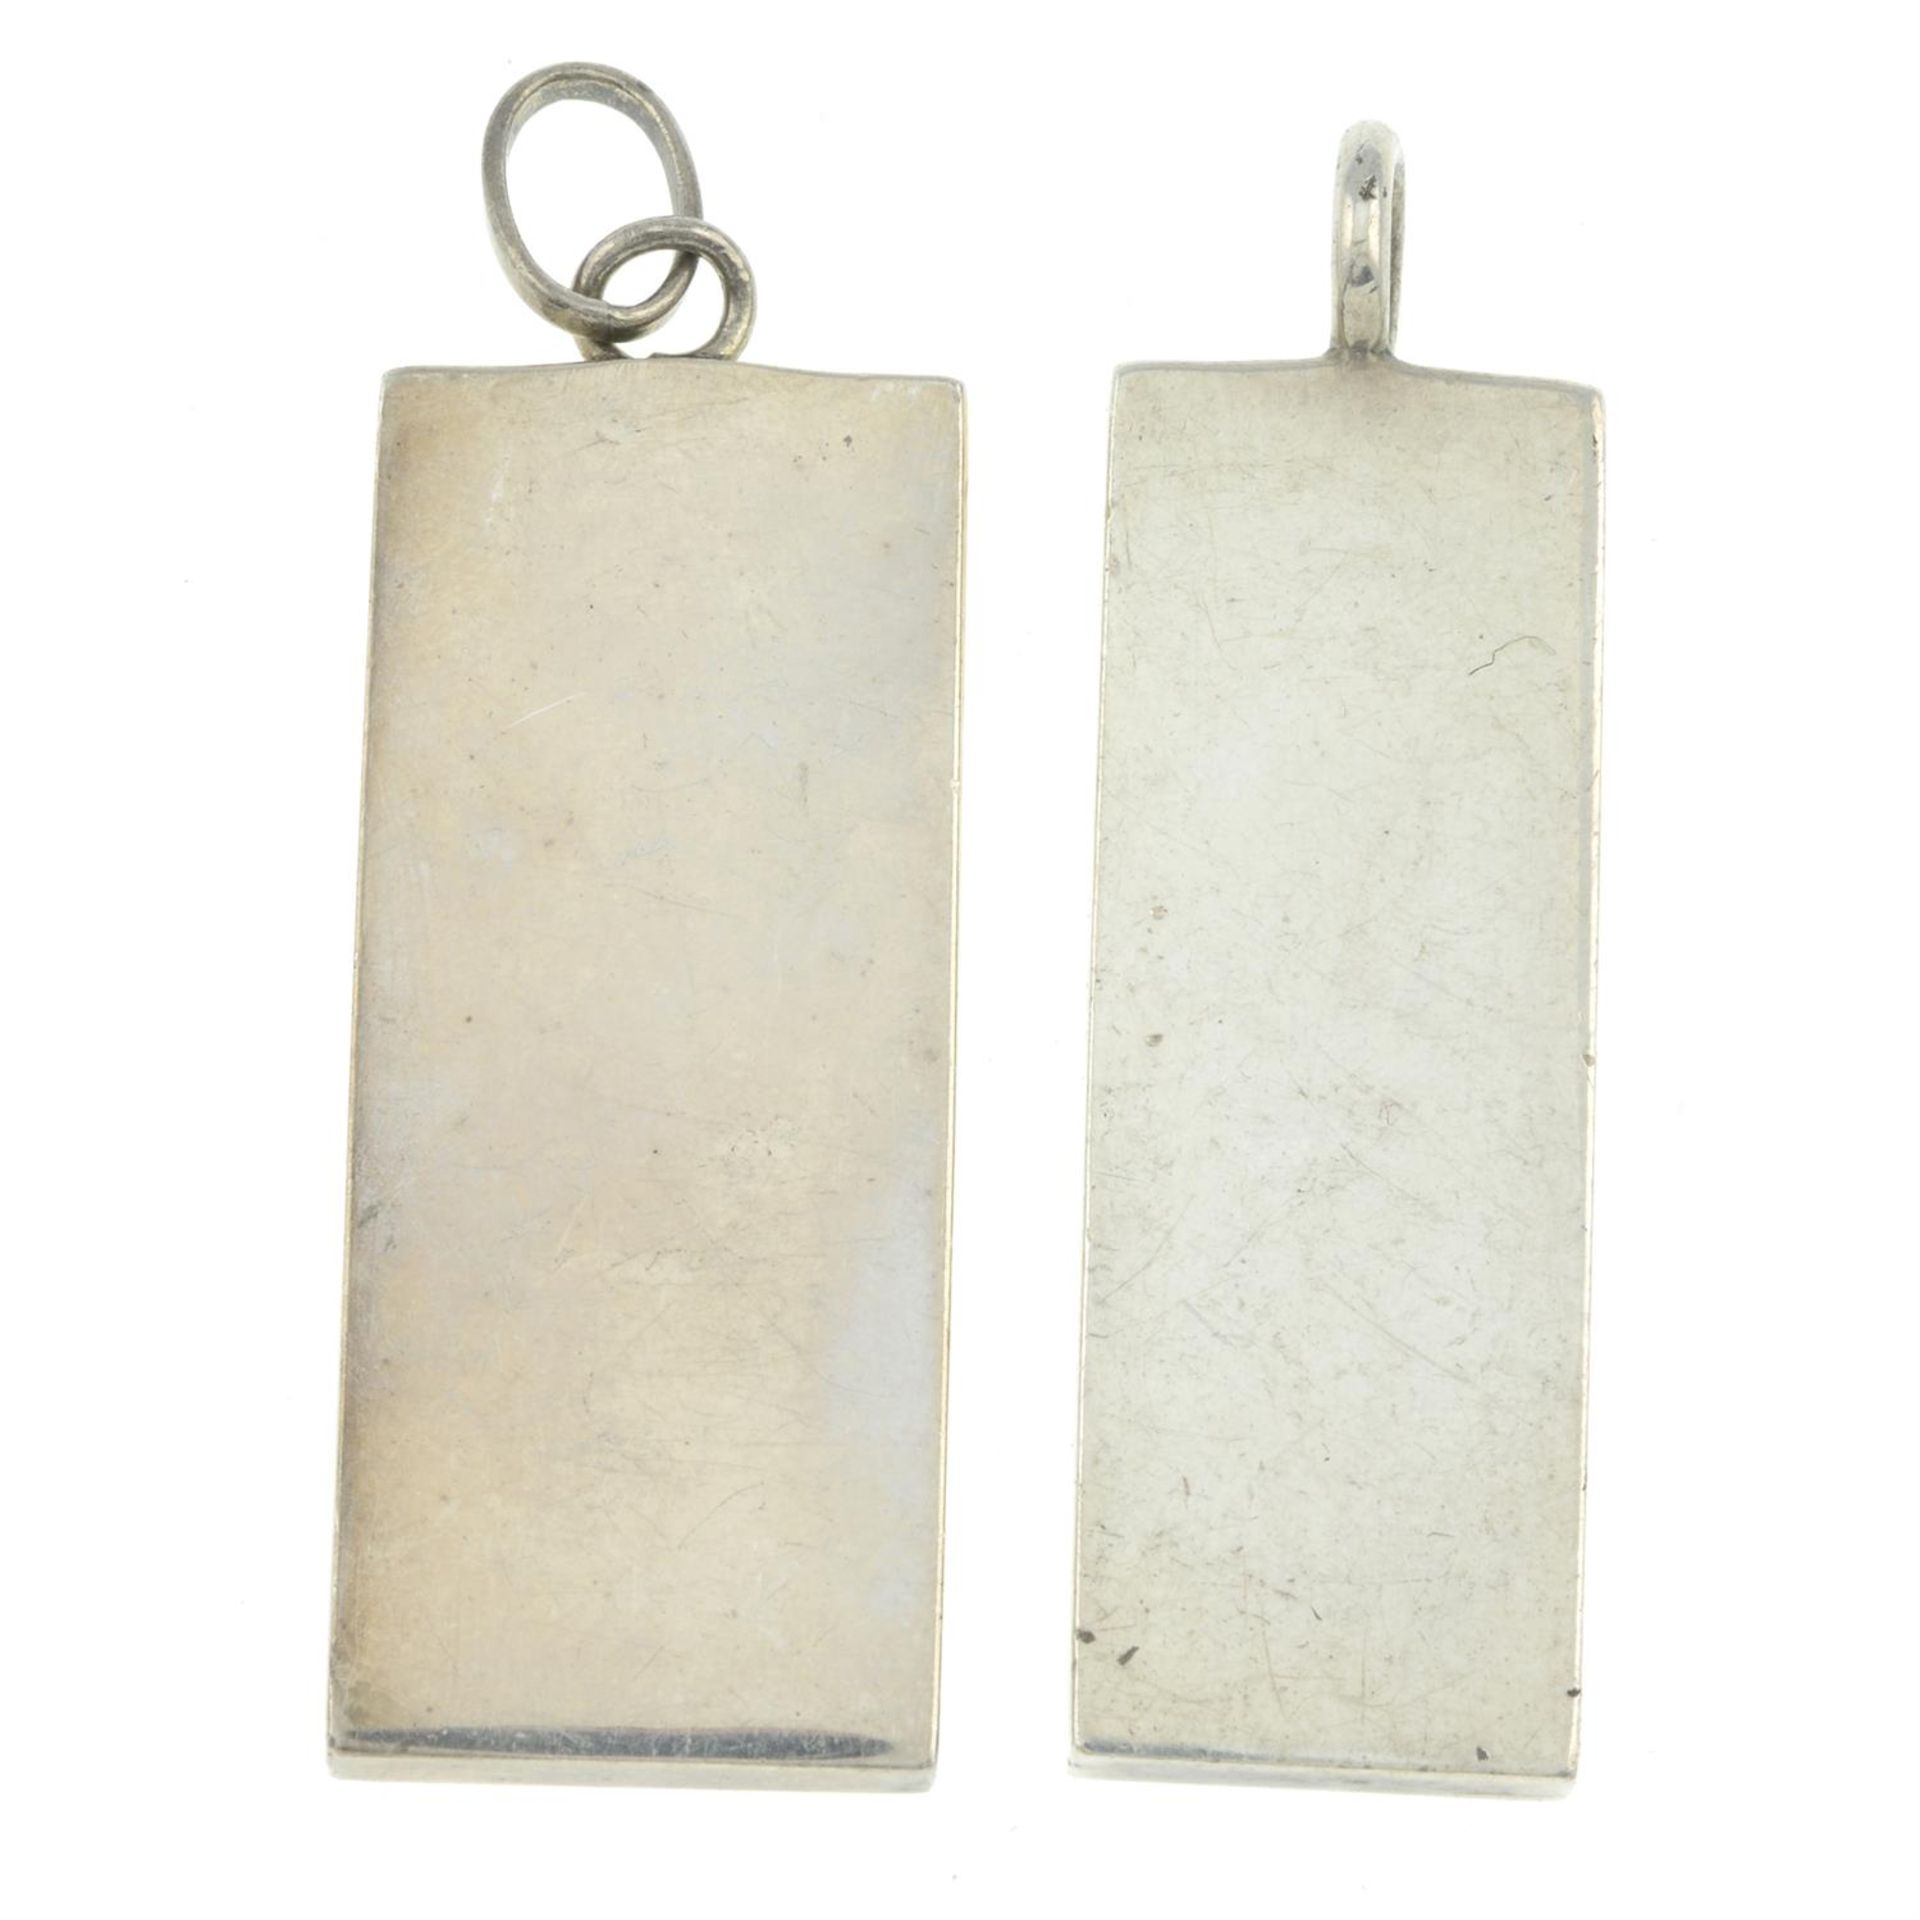 Two silver ingot pendants - Image 2 of 2